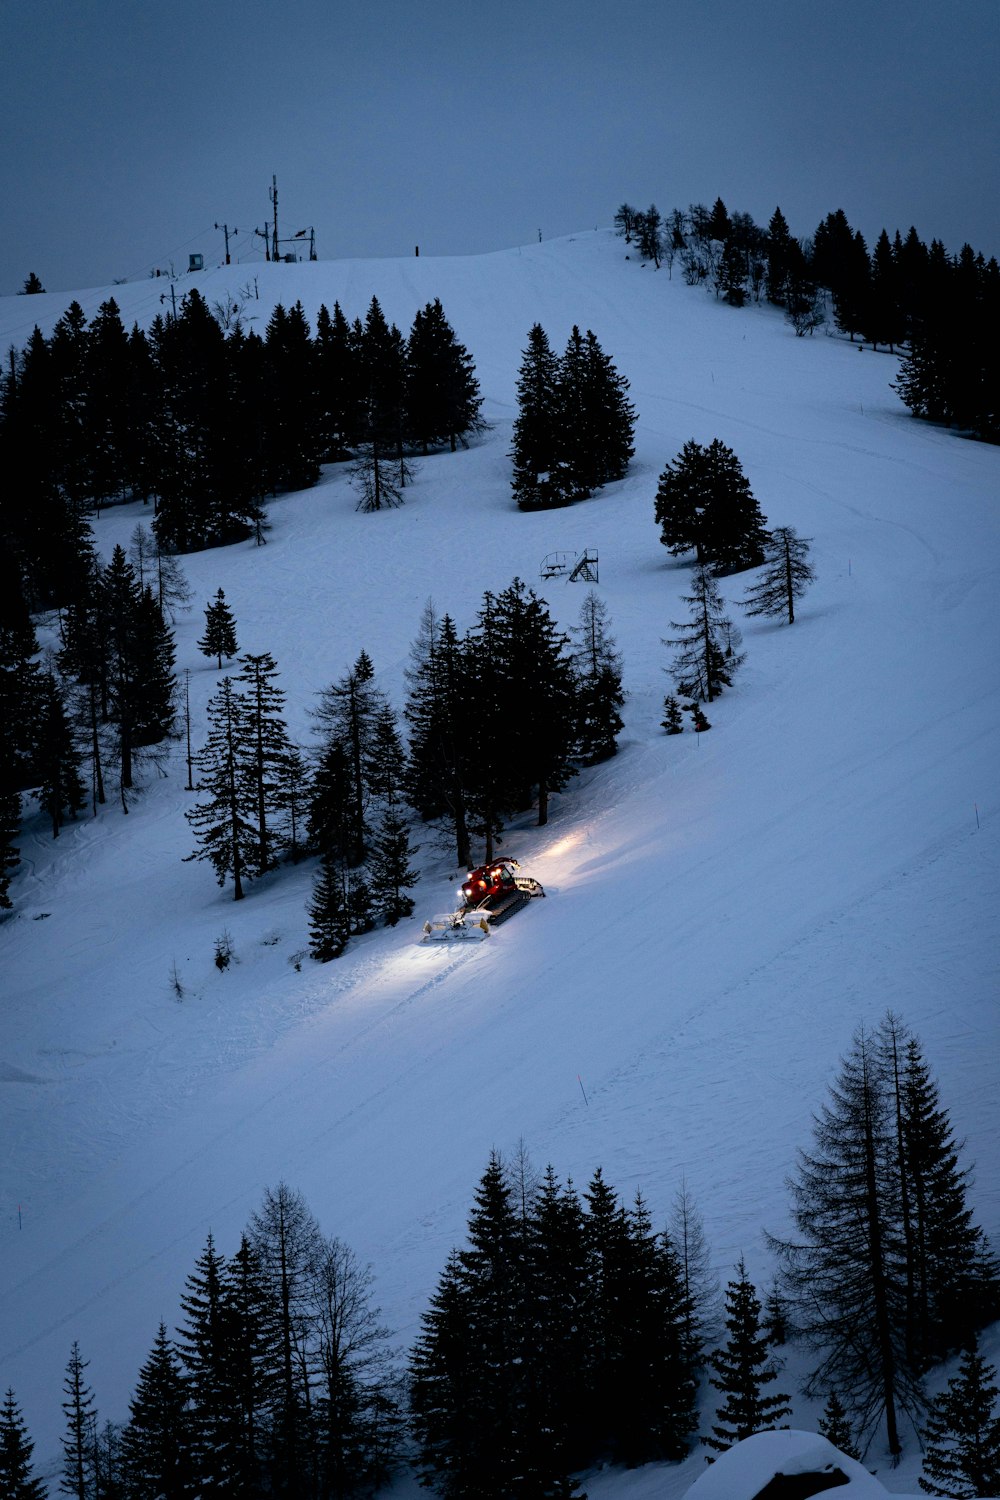 people riding on snow ski lift during daytime